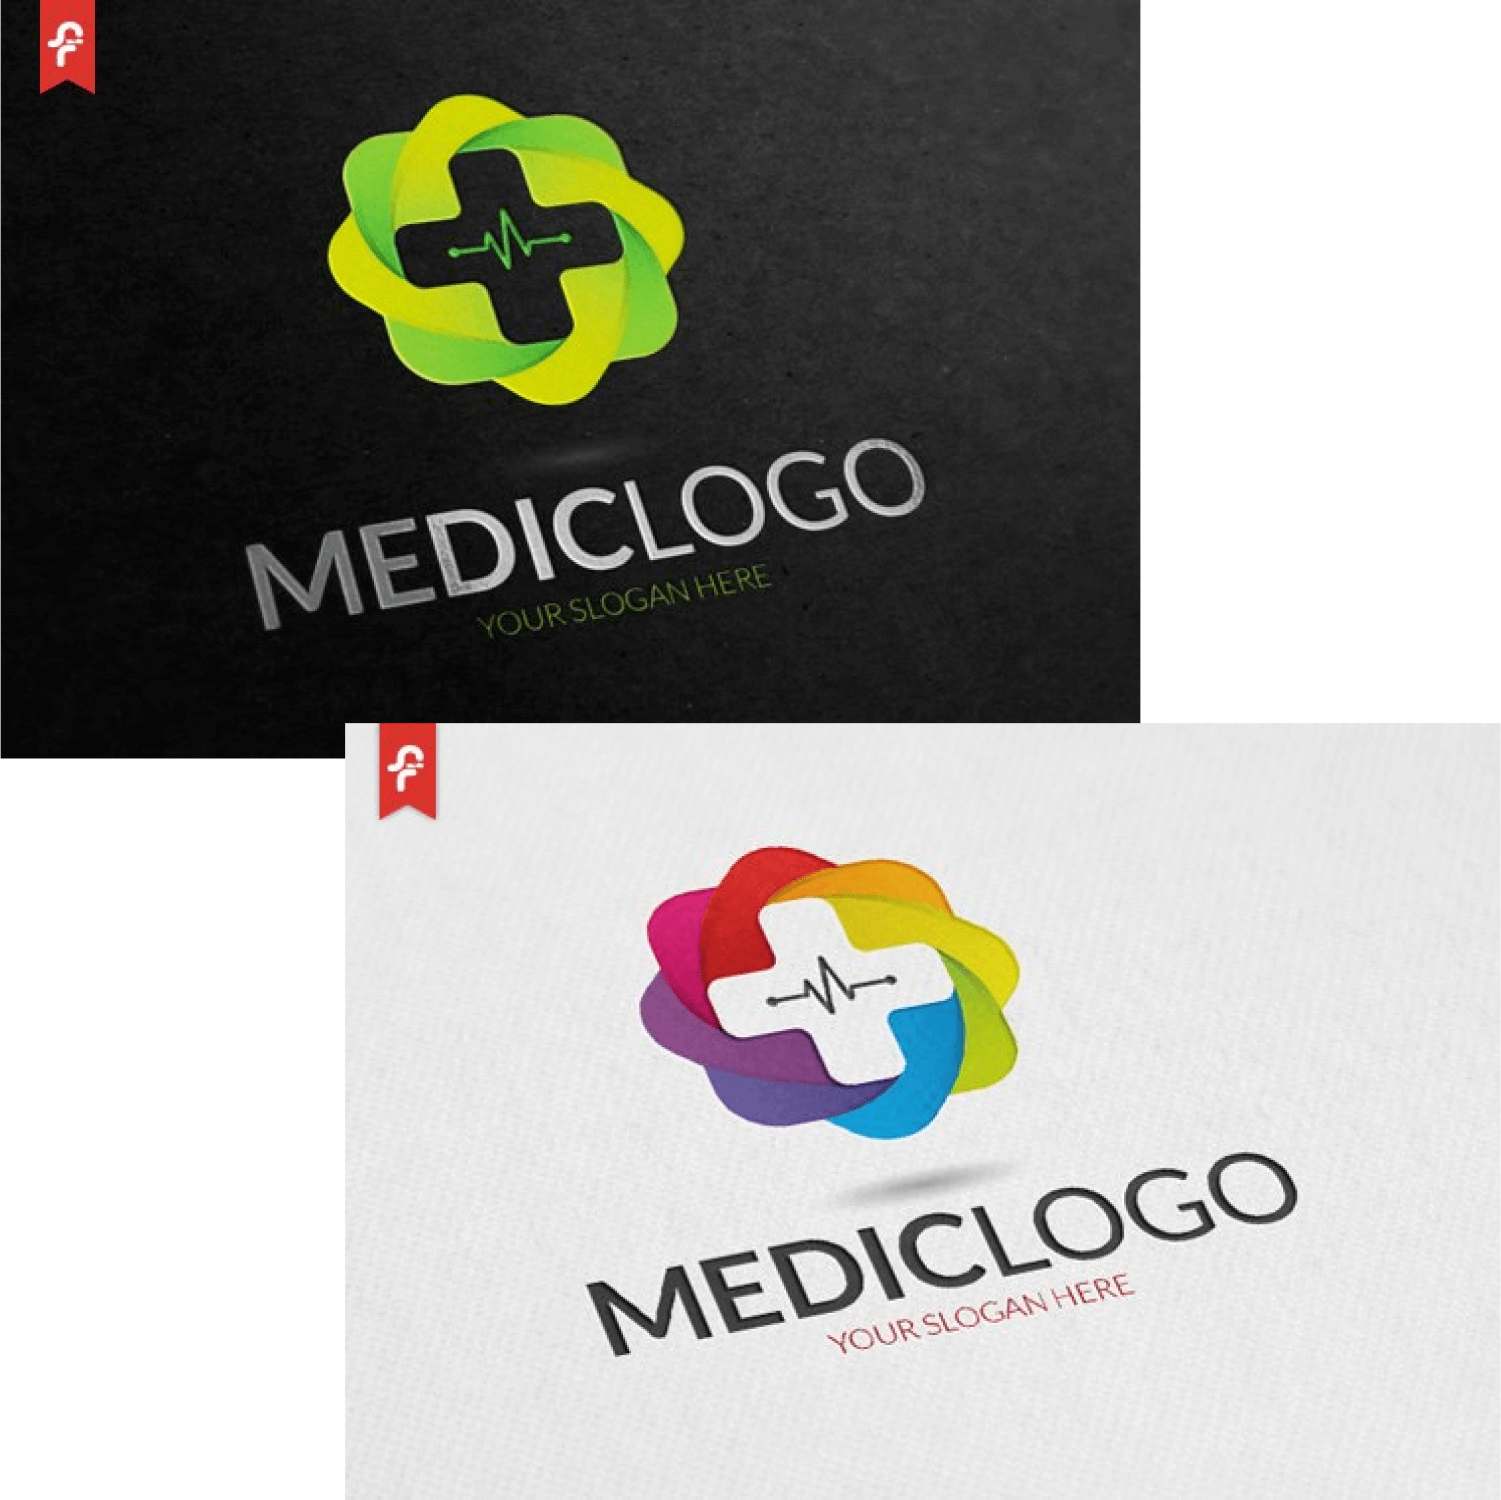 Mediclogo on Black and White Background.